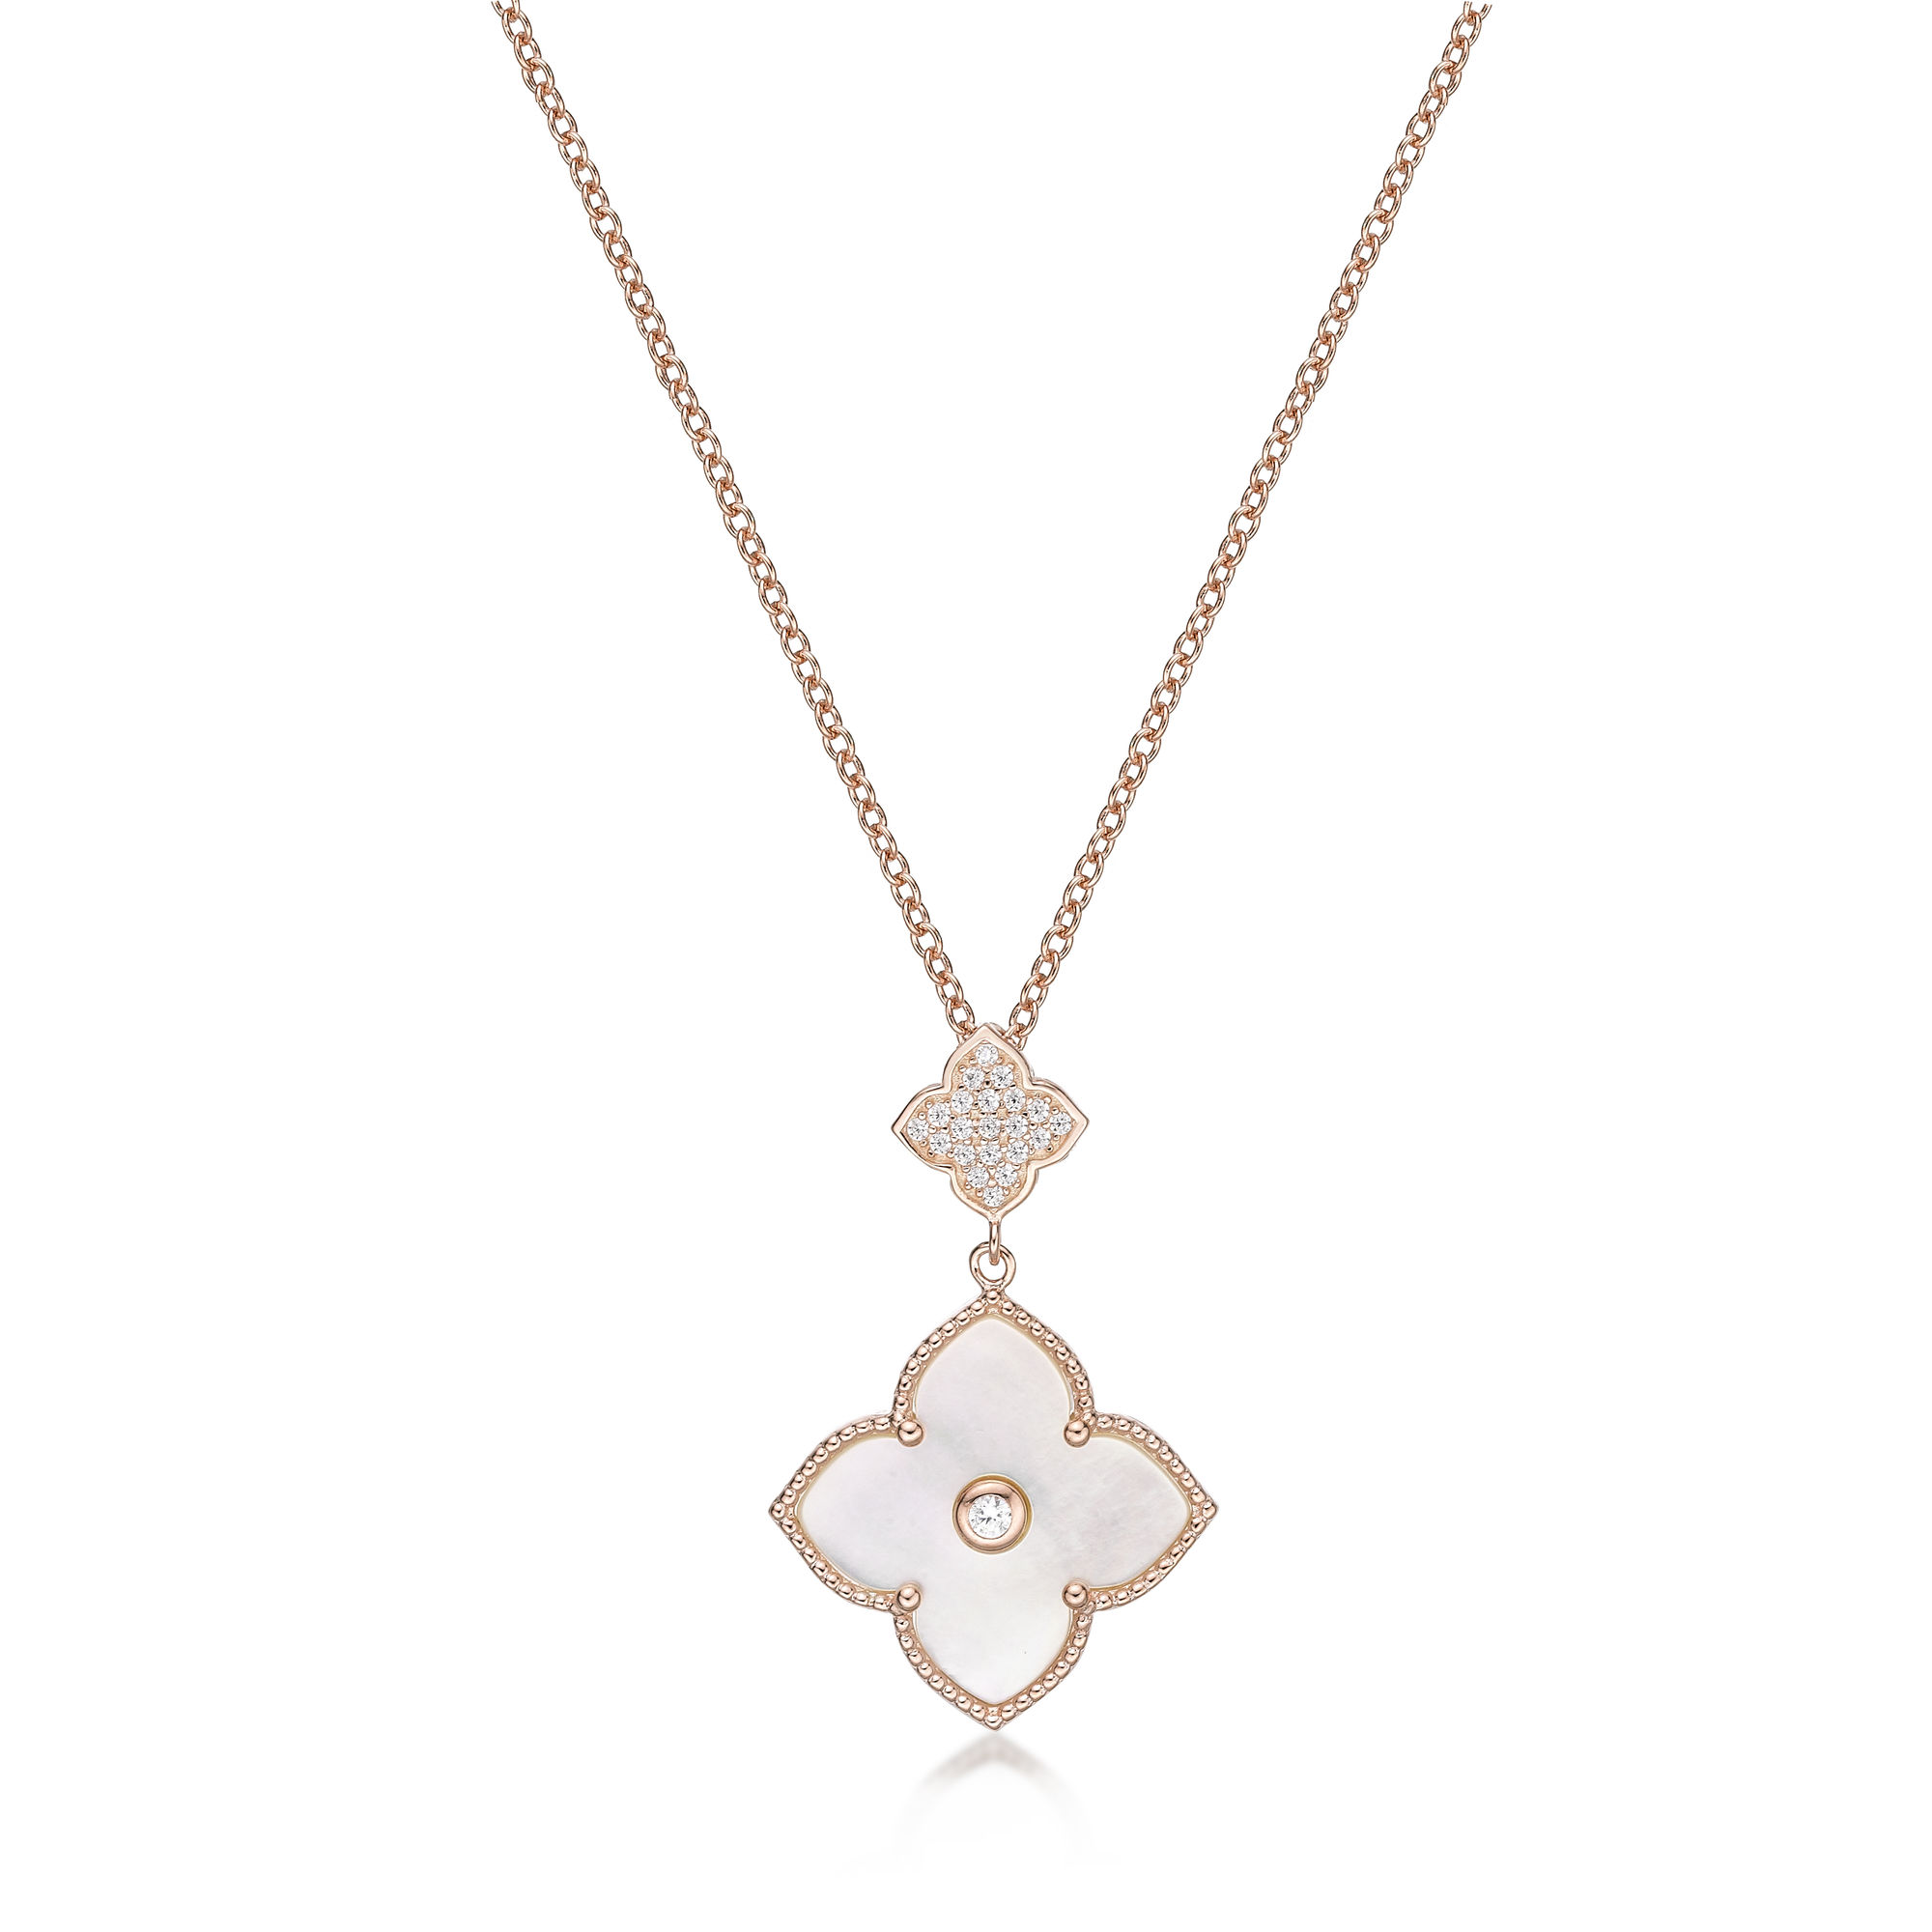 48642-necklace-c-z-pink-silver-1-1.jpg